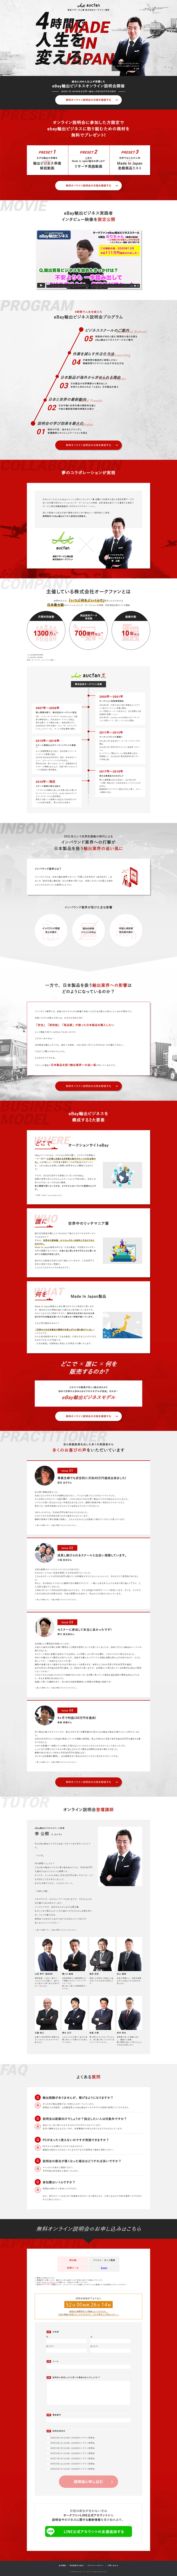 eBay輸出ビジネスオンライン説明会_pc_1